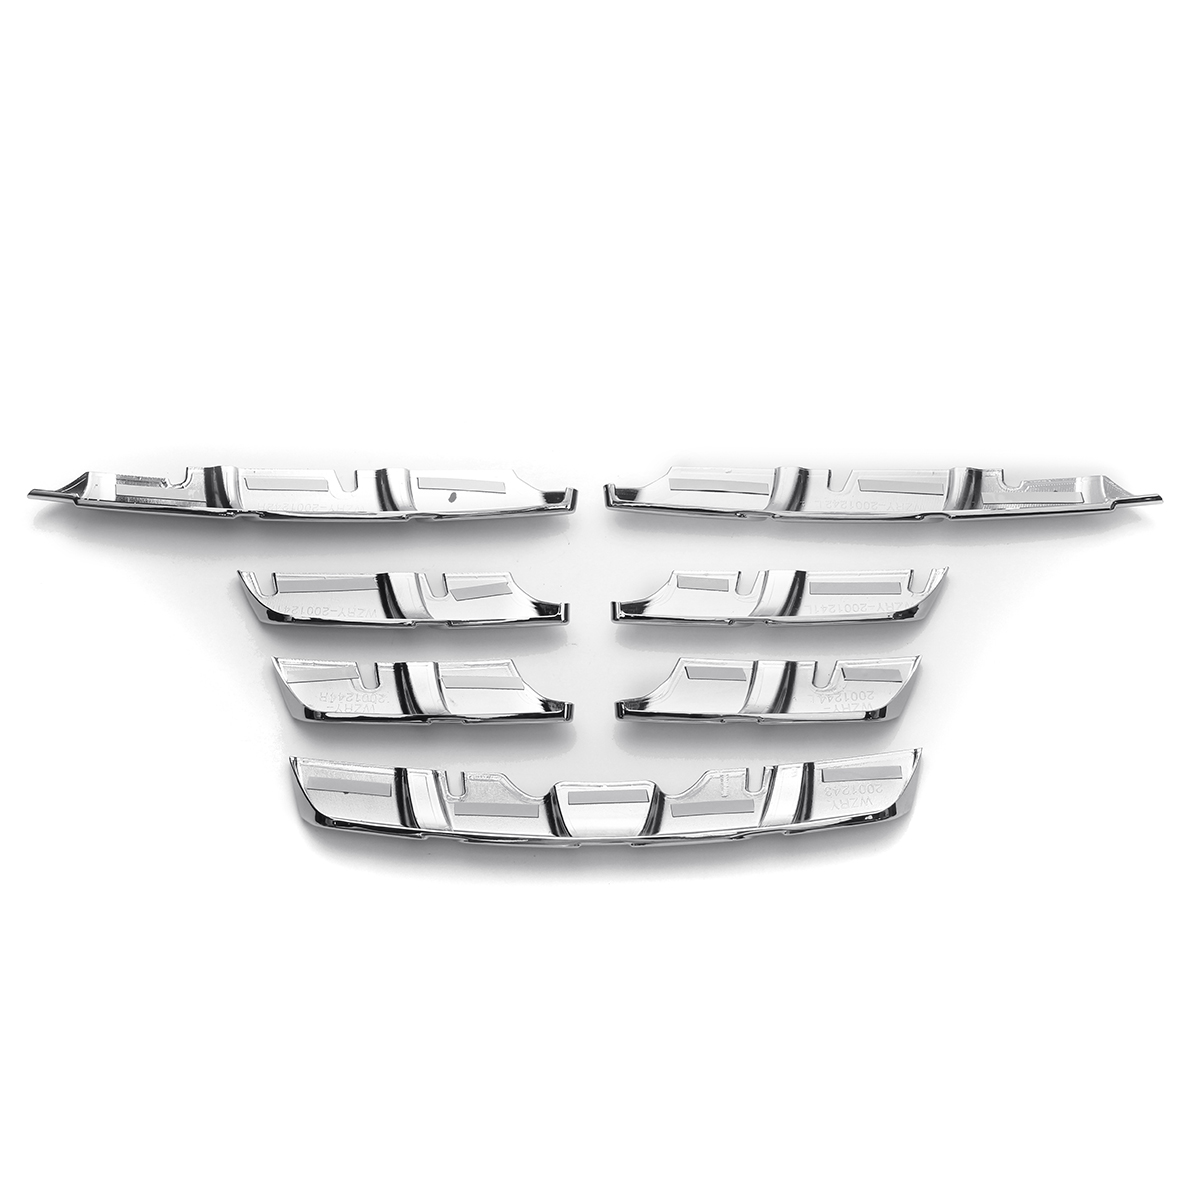 7pcs-Car-Chrome-ABS-Front-Grille-Cover-Trim-Molding-For-Renault-Kadjar-2015-2016-2017-1394453